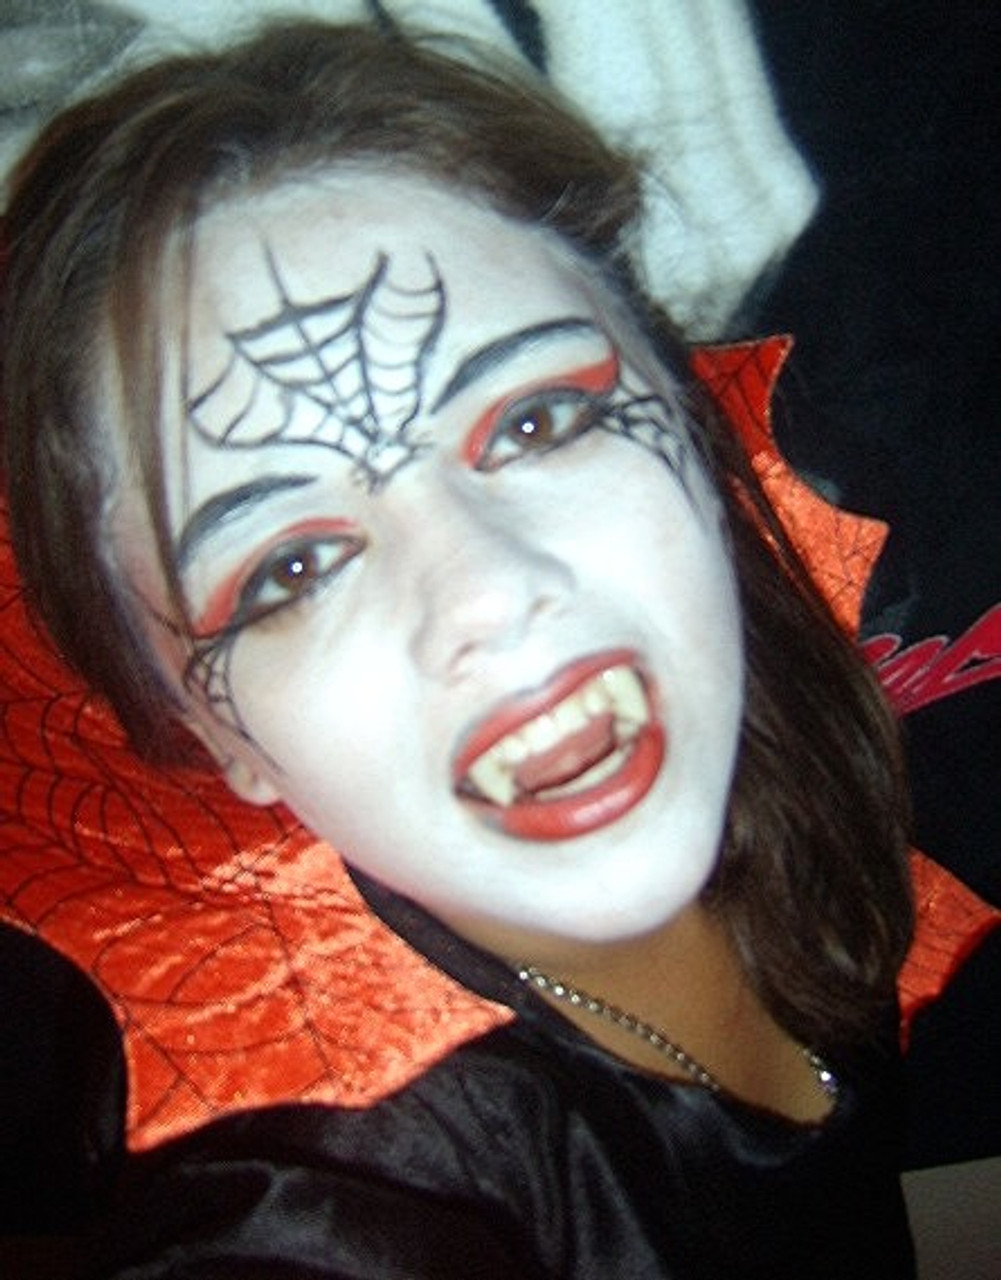 8pc Natural Face Paint Vampire Goth Clown Halloween Costume Makeup Kit 